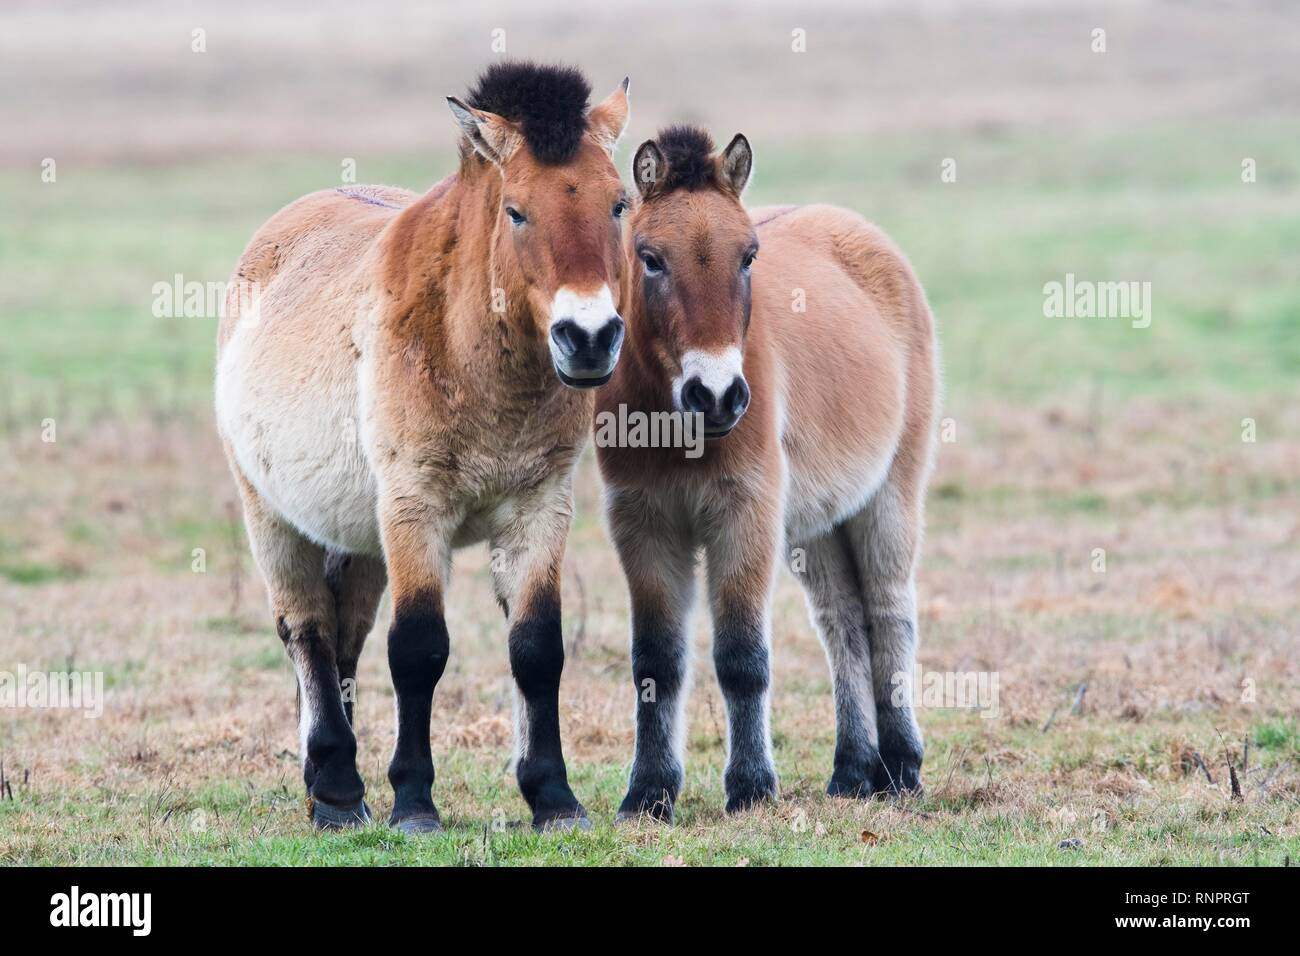 Los caballos de Przewalski (Equus ferus przewalskii), Emsland, Baja Sajonia, Alemania Foto de stock